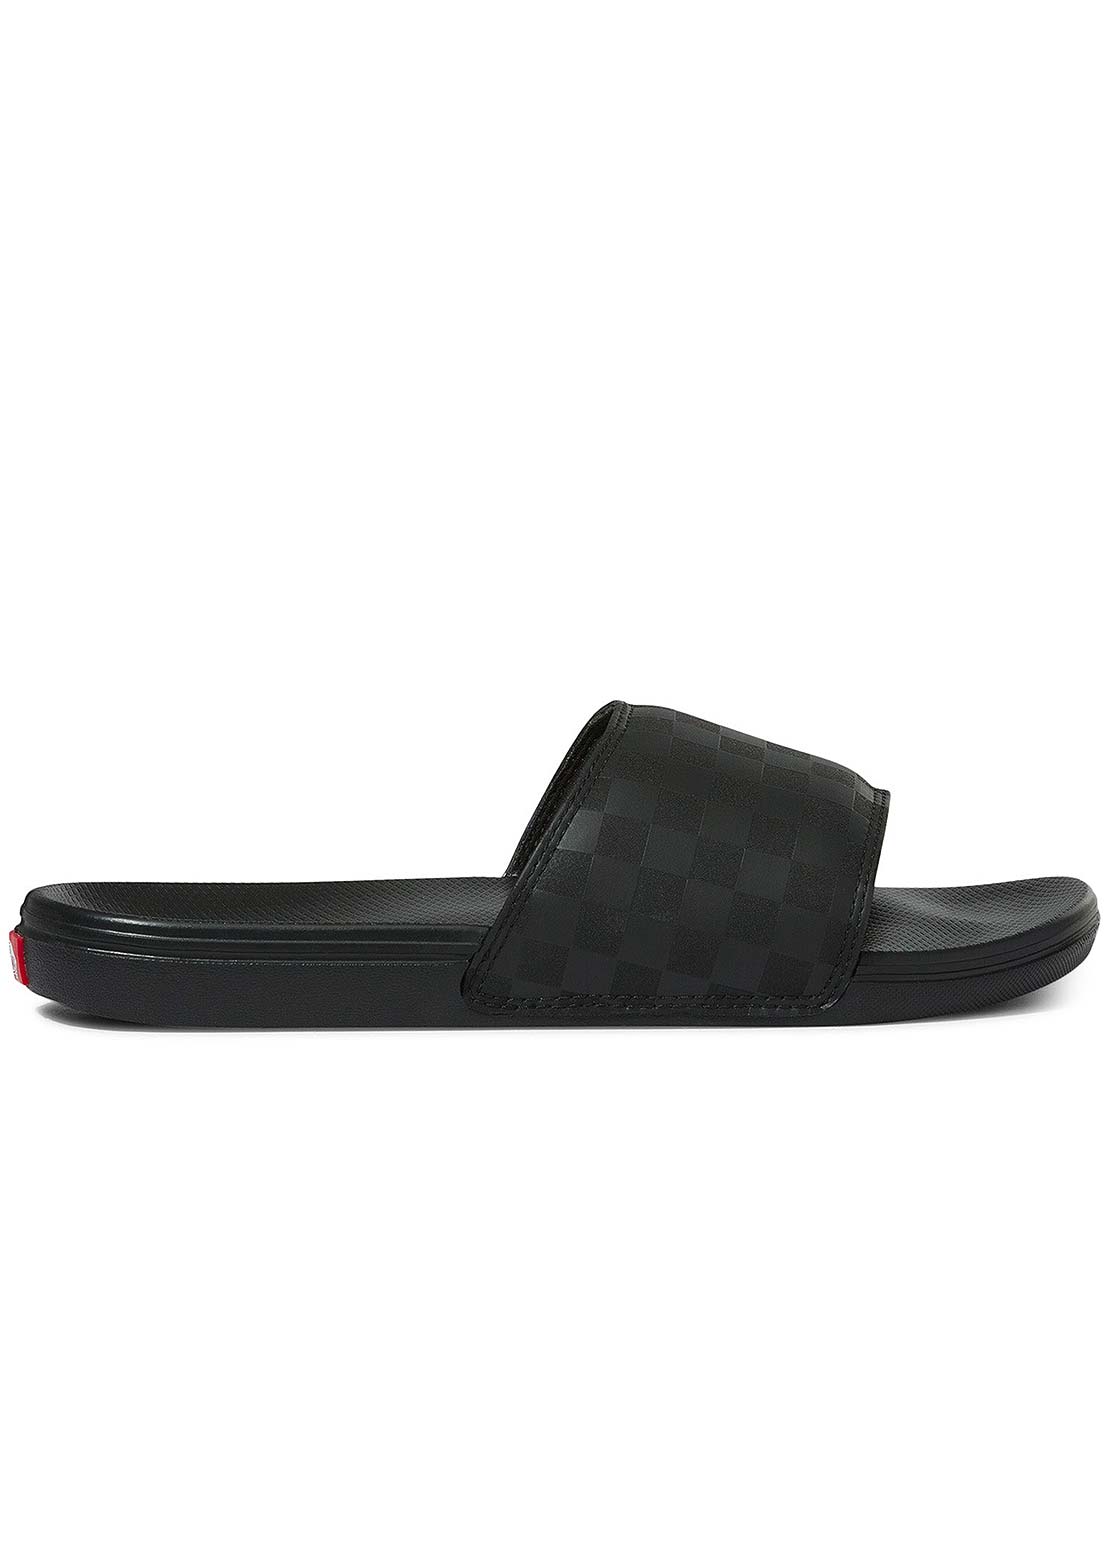 Vans Men&#39;s La Costa Slide-On Shoes (Checkerboard) Black/Black